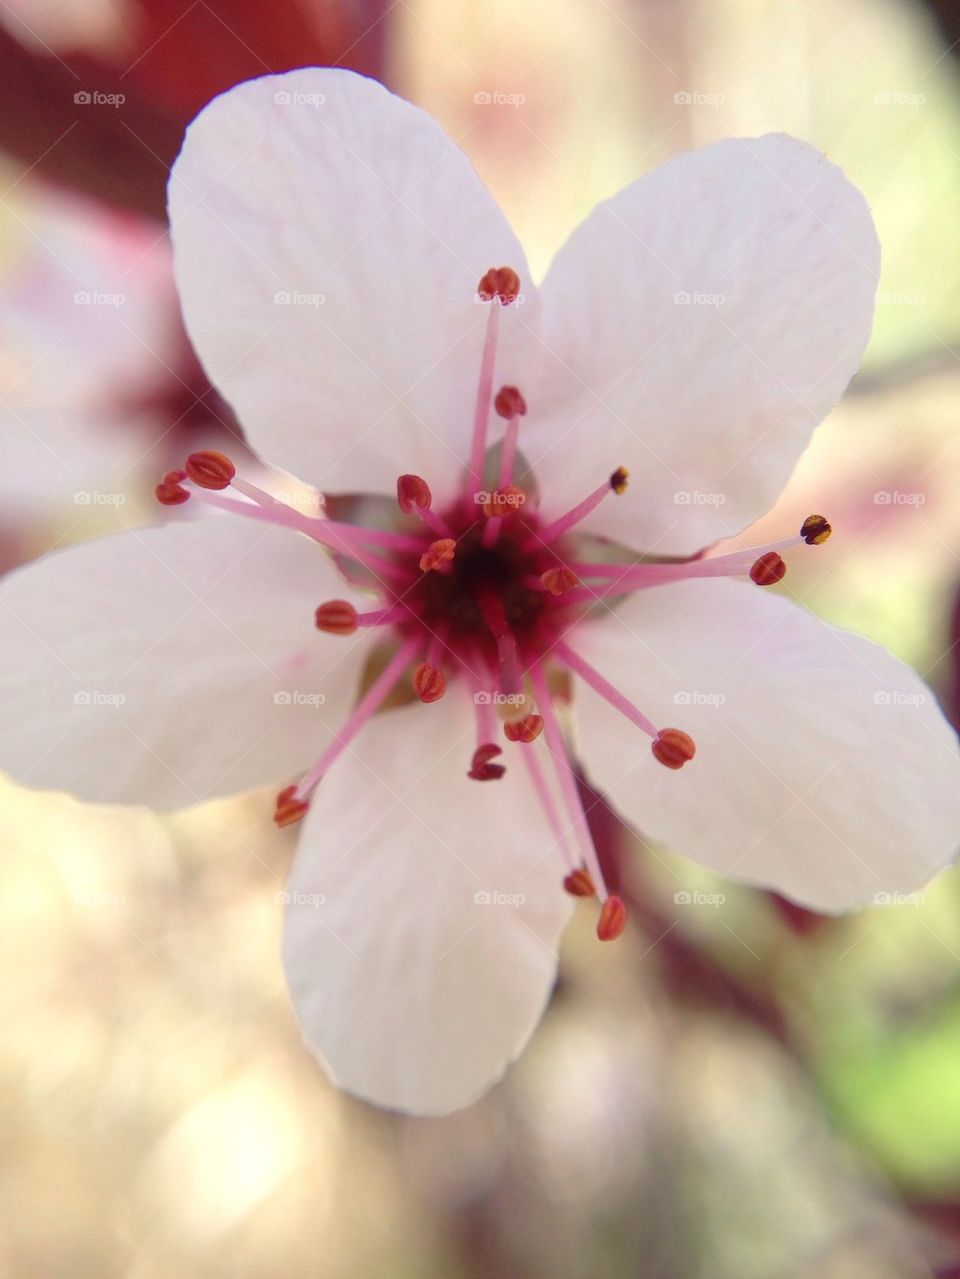 Up close flower